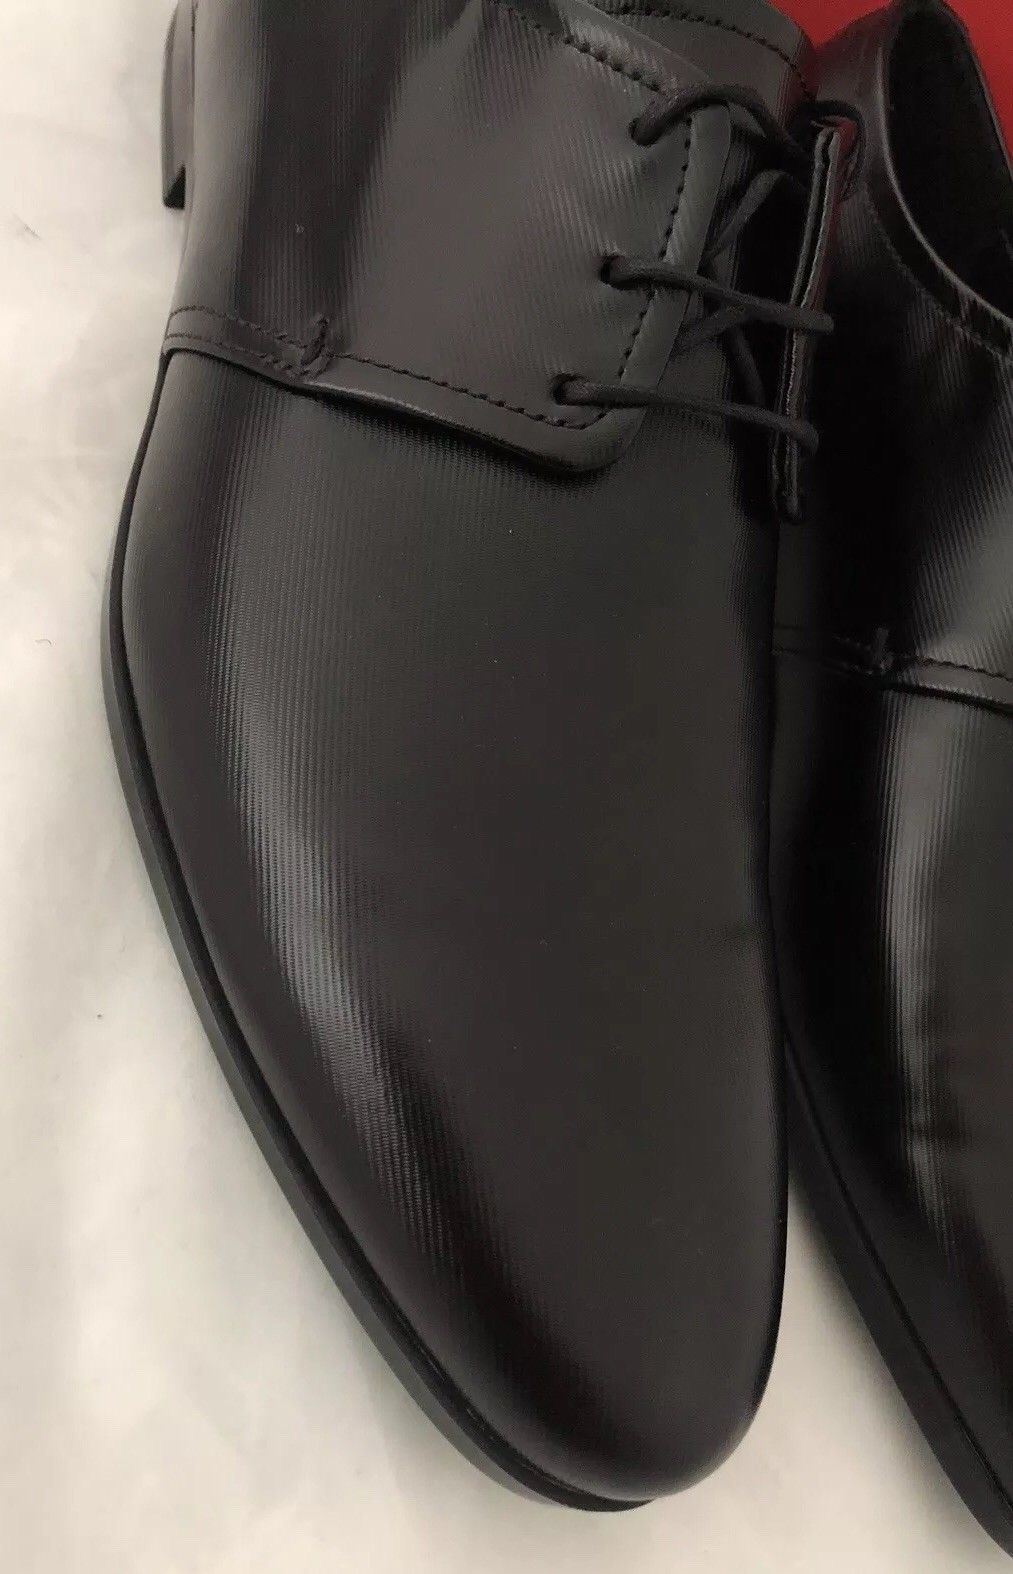 NIB $295 Boss Hugo Boss Pariss_Derb_3ml Men’s Leather Dress Shoes Black 12 US